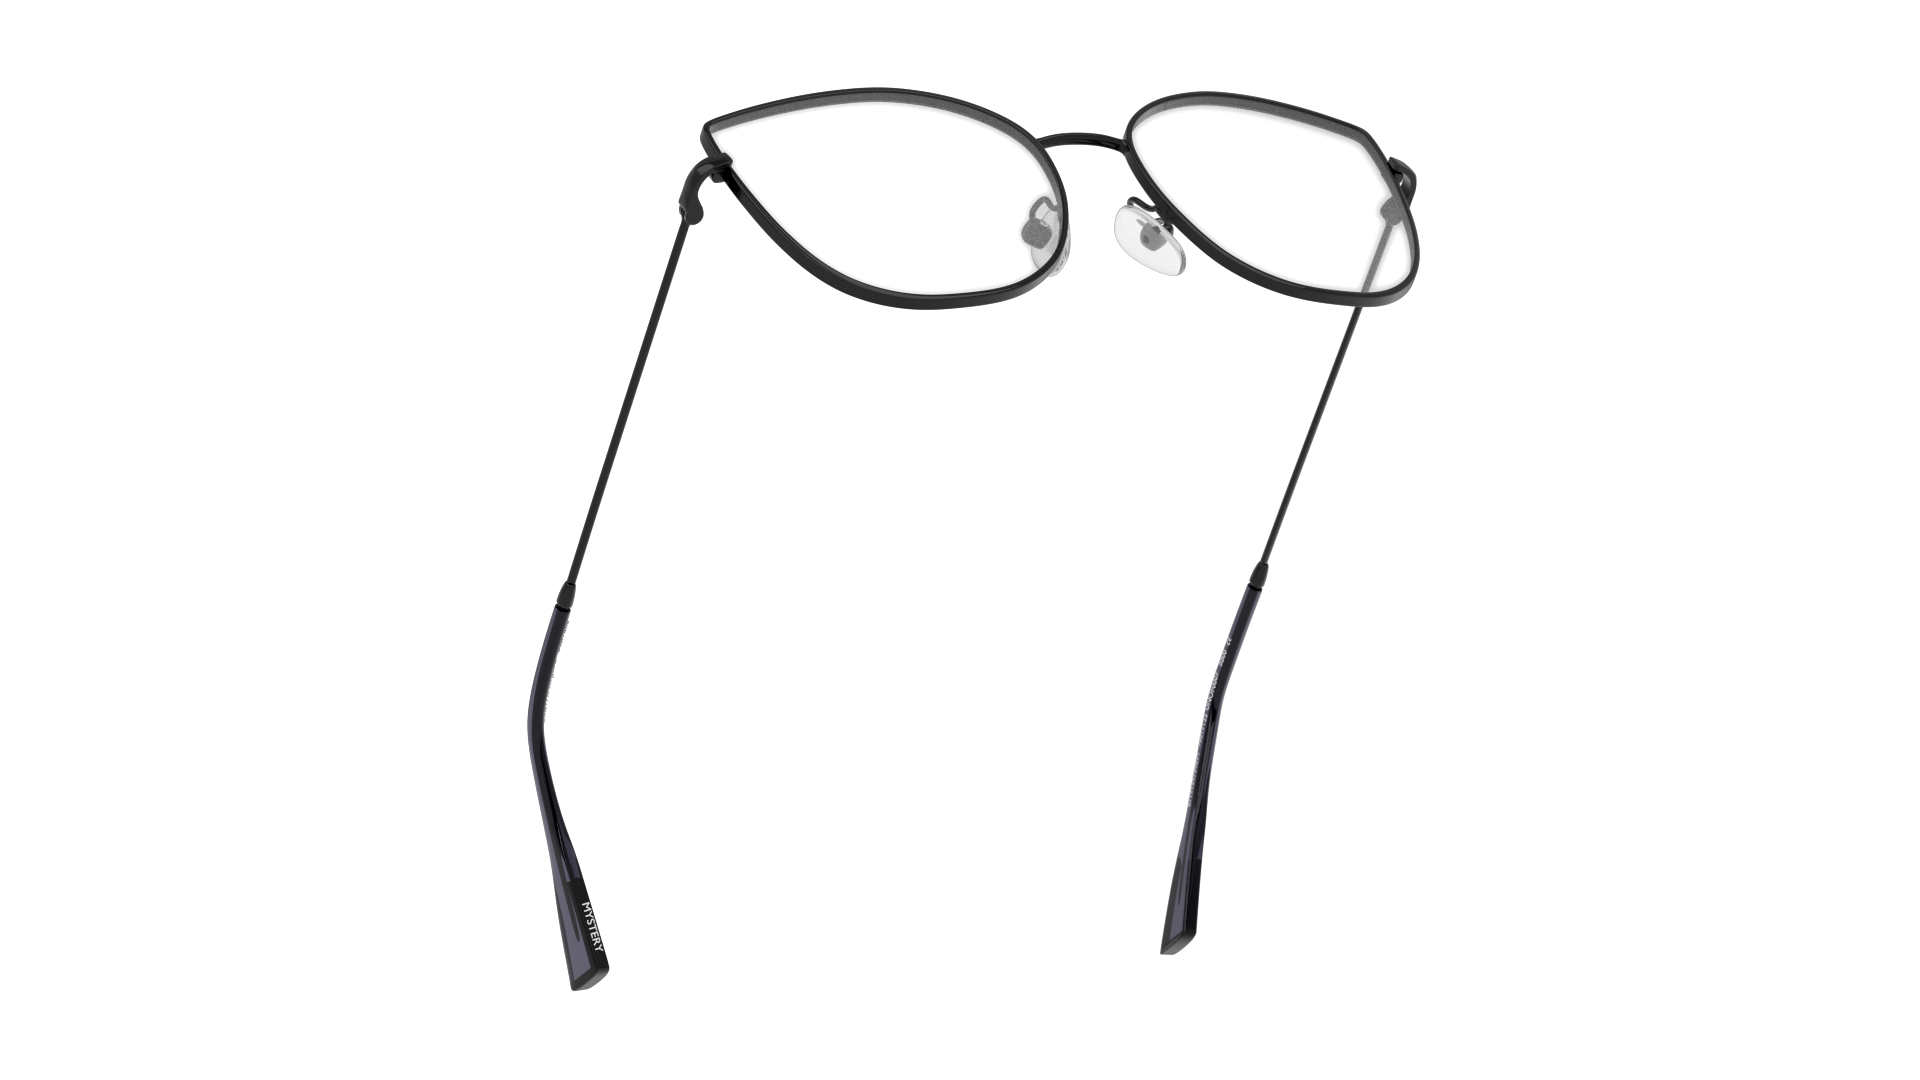 Bottom_Up Unofficial UNOF0007 (BB00) Glasses Transparent / Black